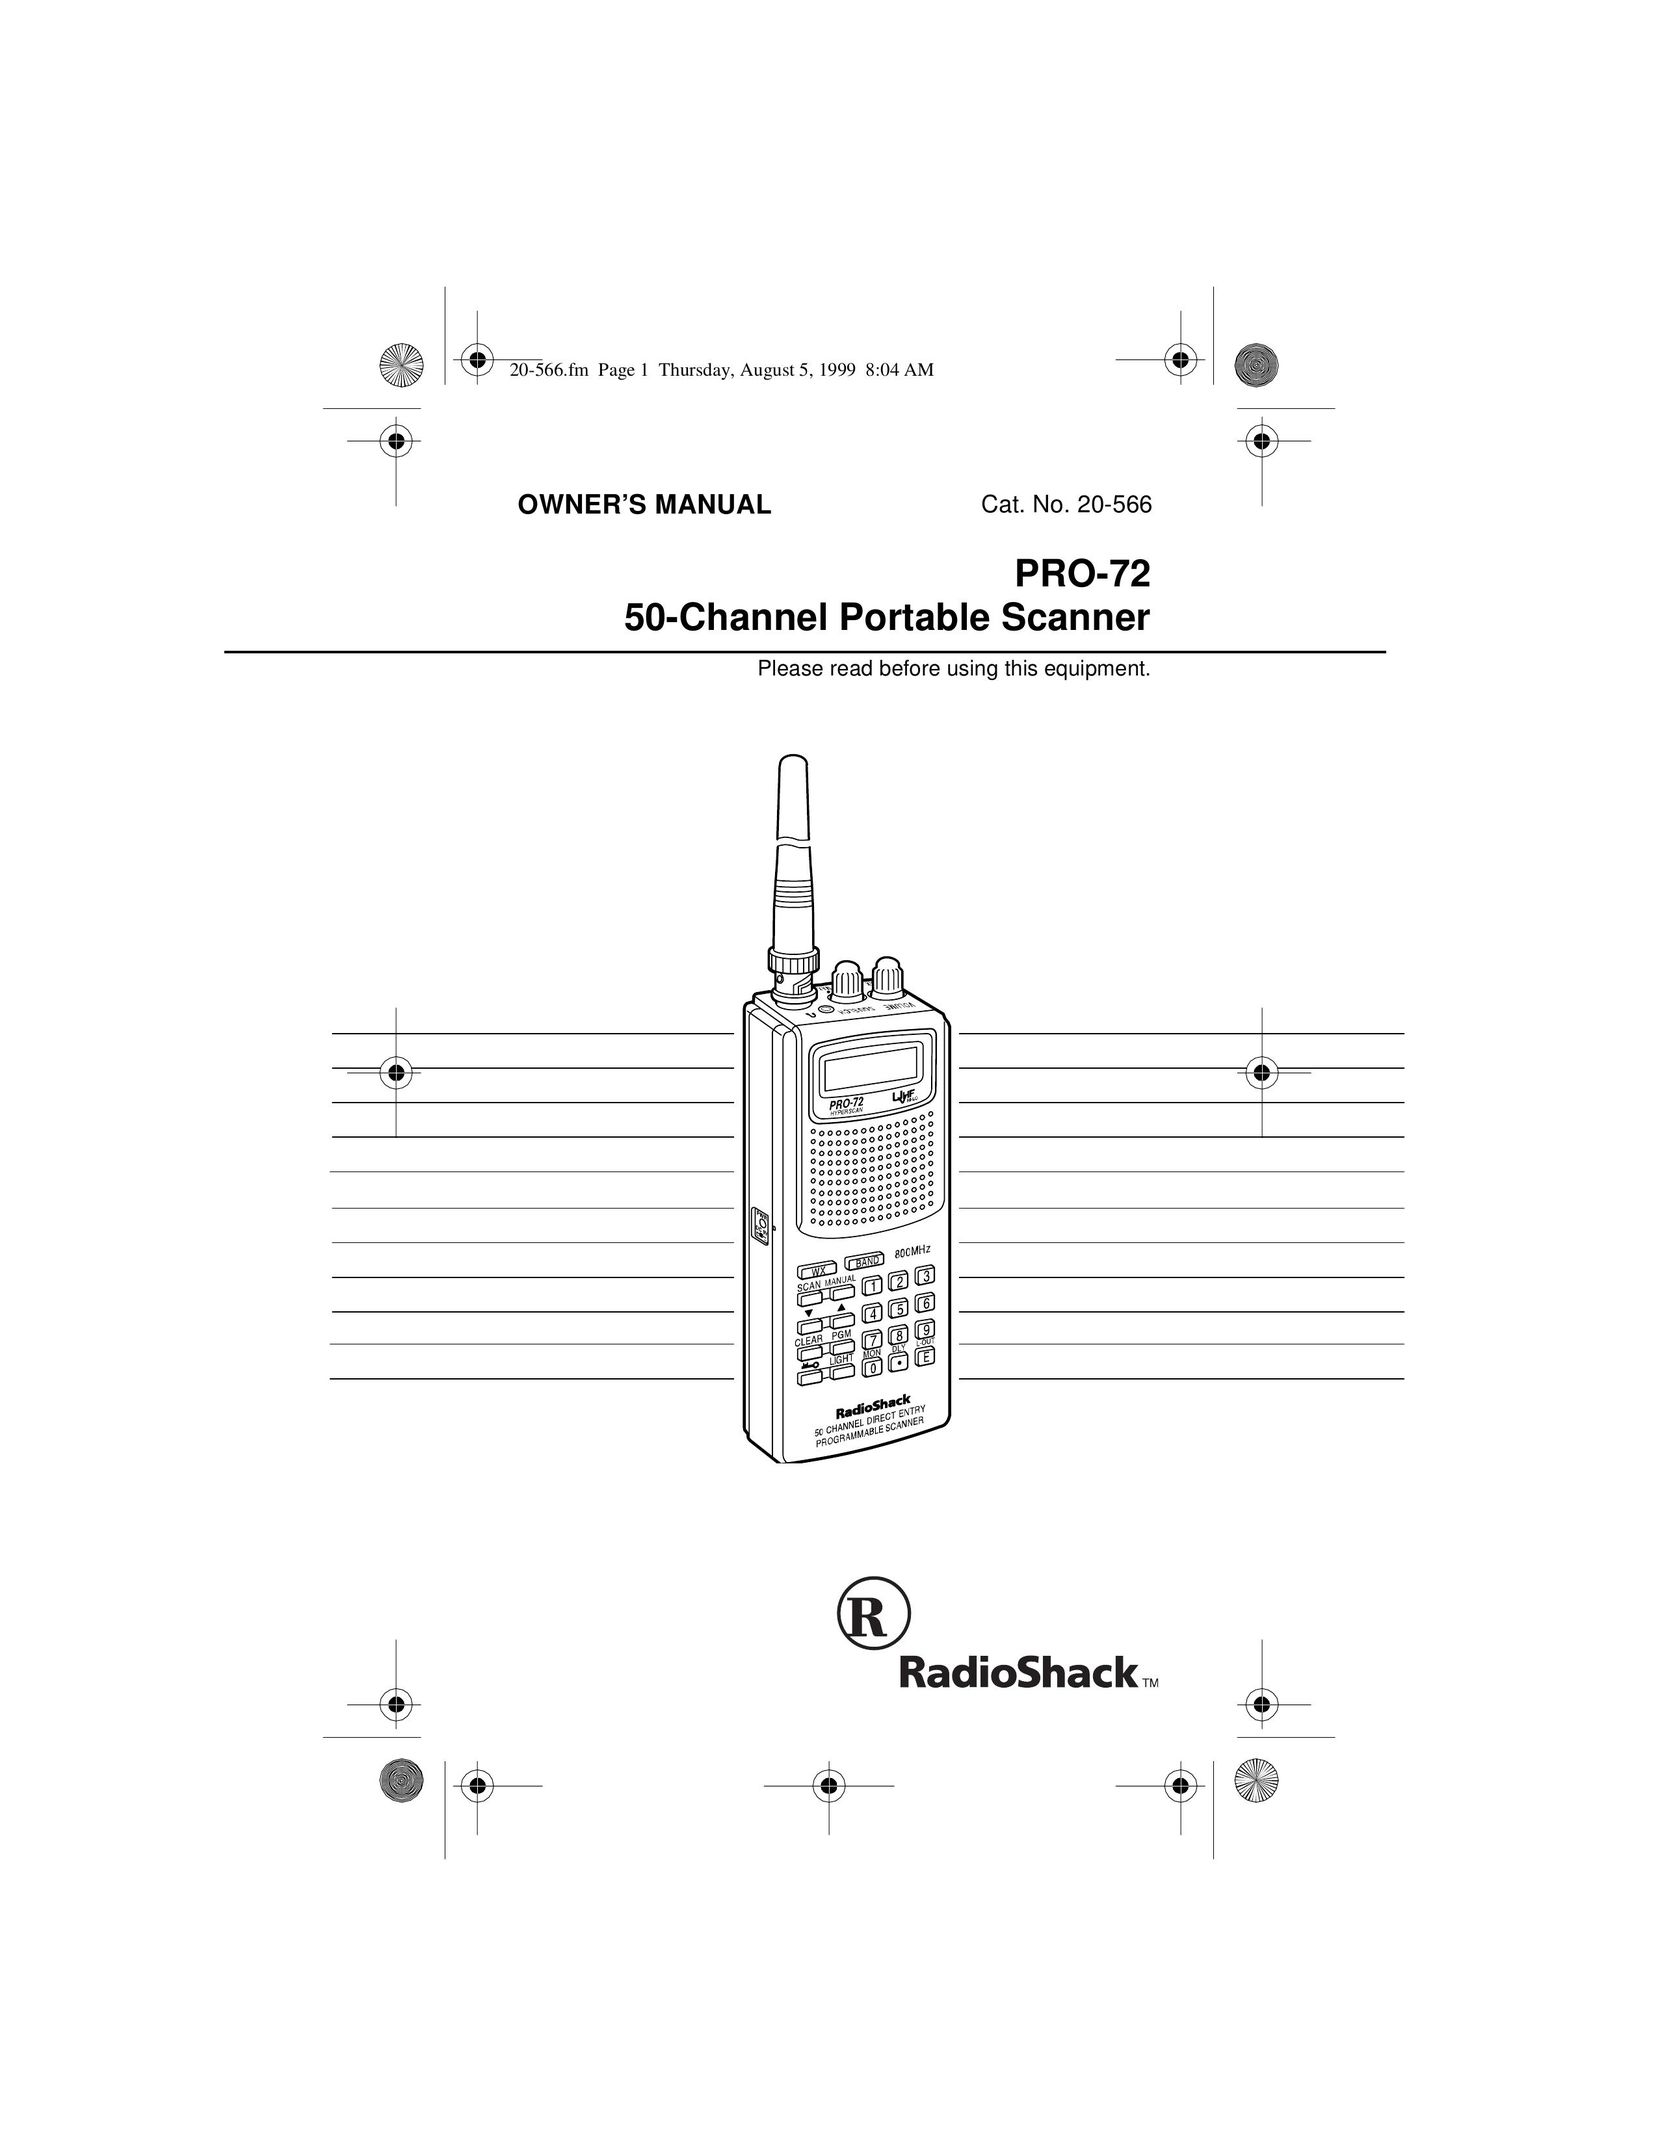 Radio Shack PRO-72 Scanner User Manual